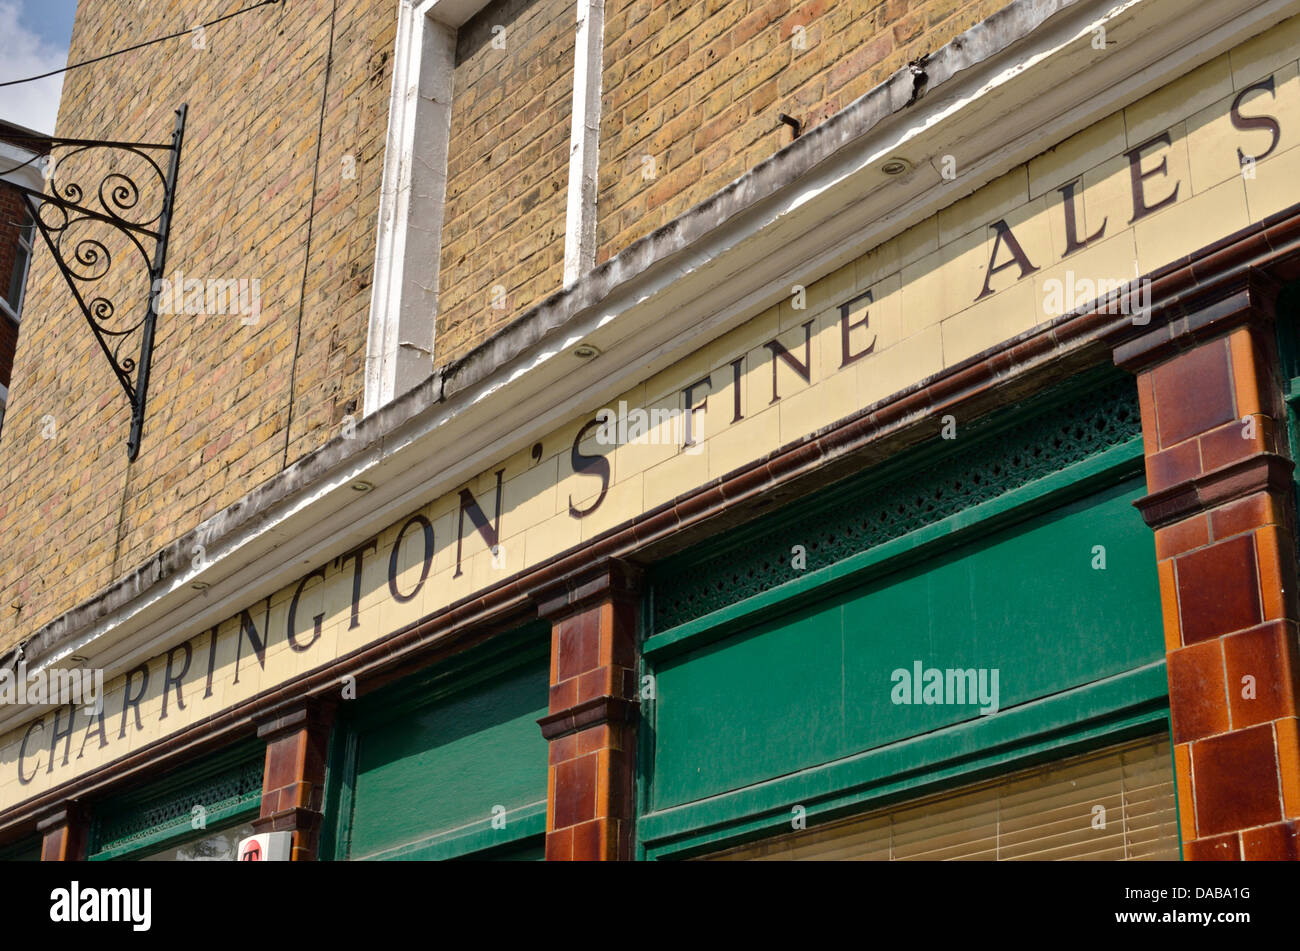 Charrington's Fine Ales sign outside a UK pub Stock Photo